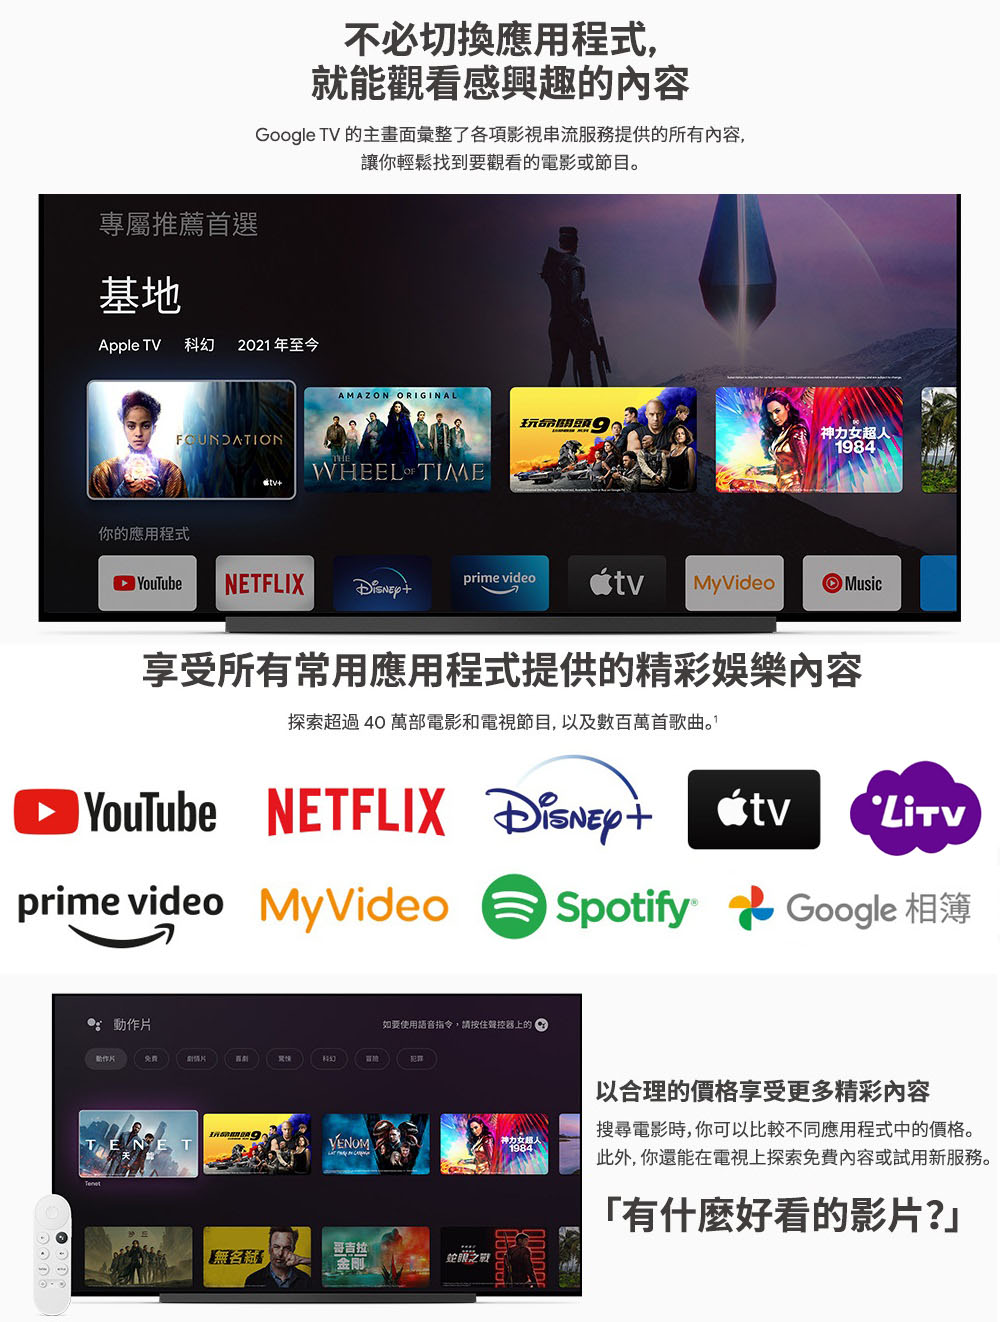 【Google】Chromecast GoogleTV 影音播放器 台灣公司貨